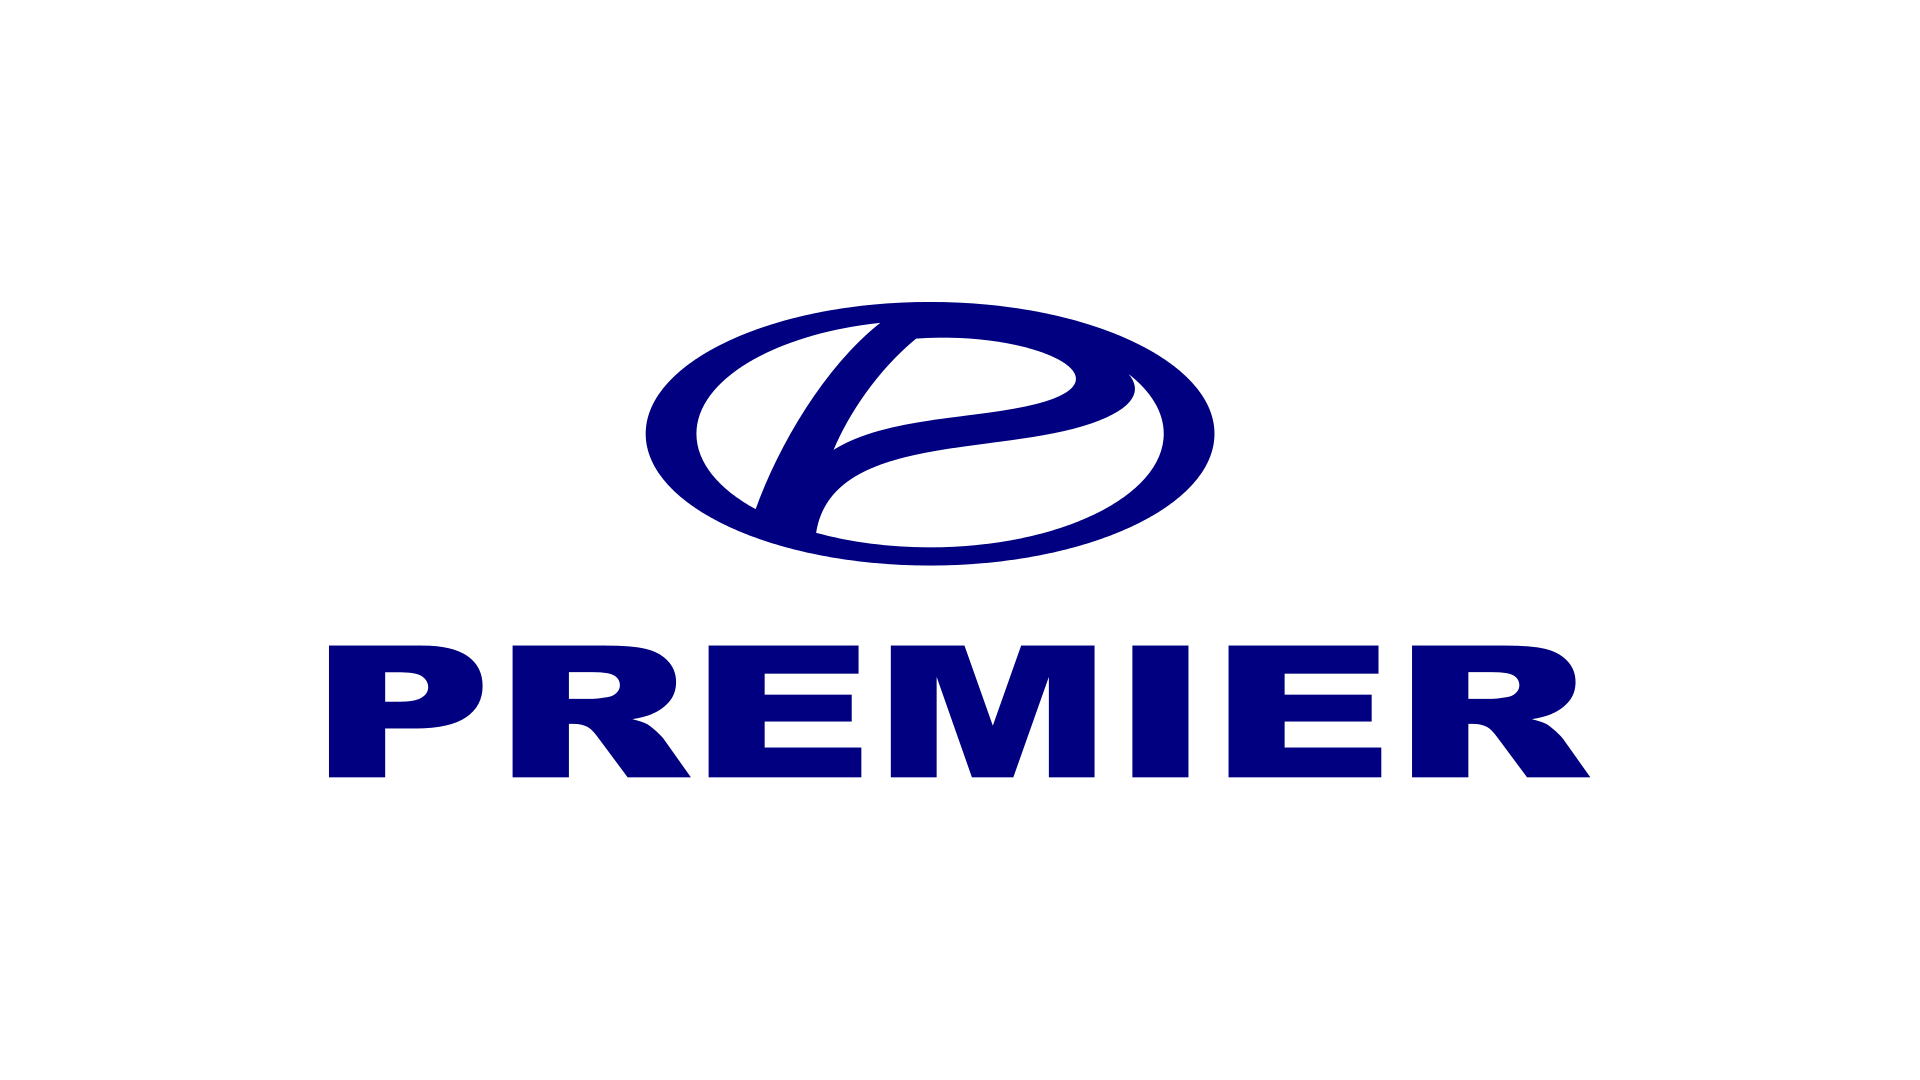 Премьер логотип. Premier бытовая техника. Premier бытовая техника logo. Лого премьер авто. Premier logo png